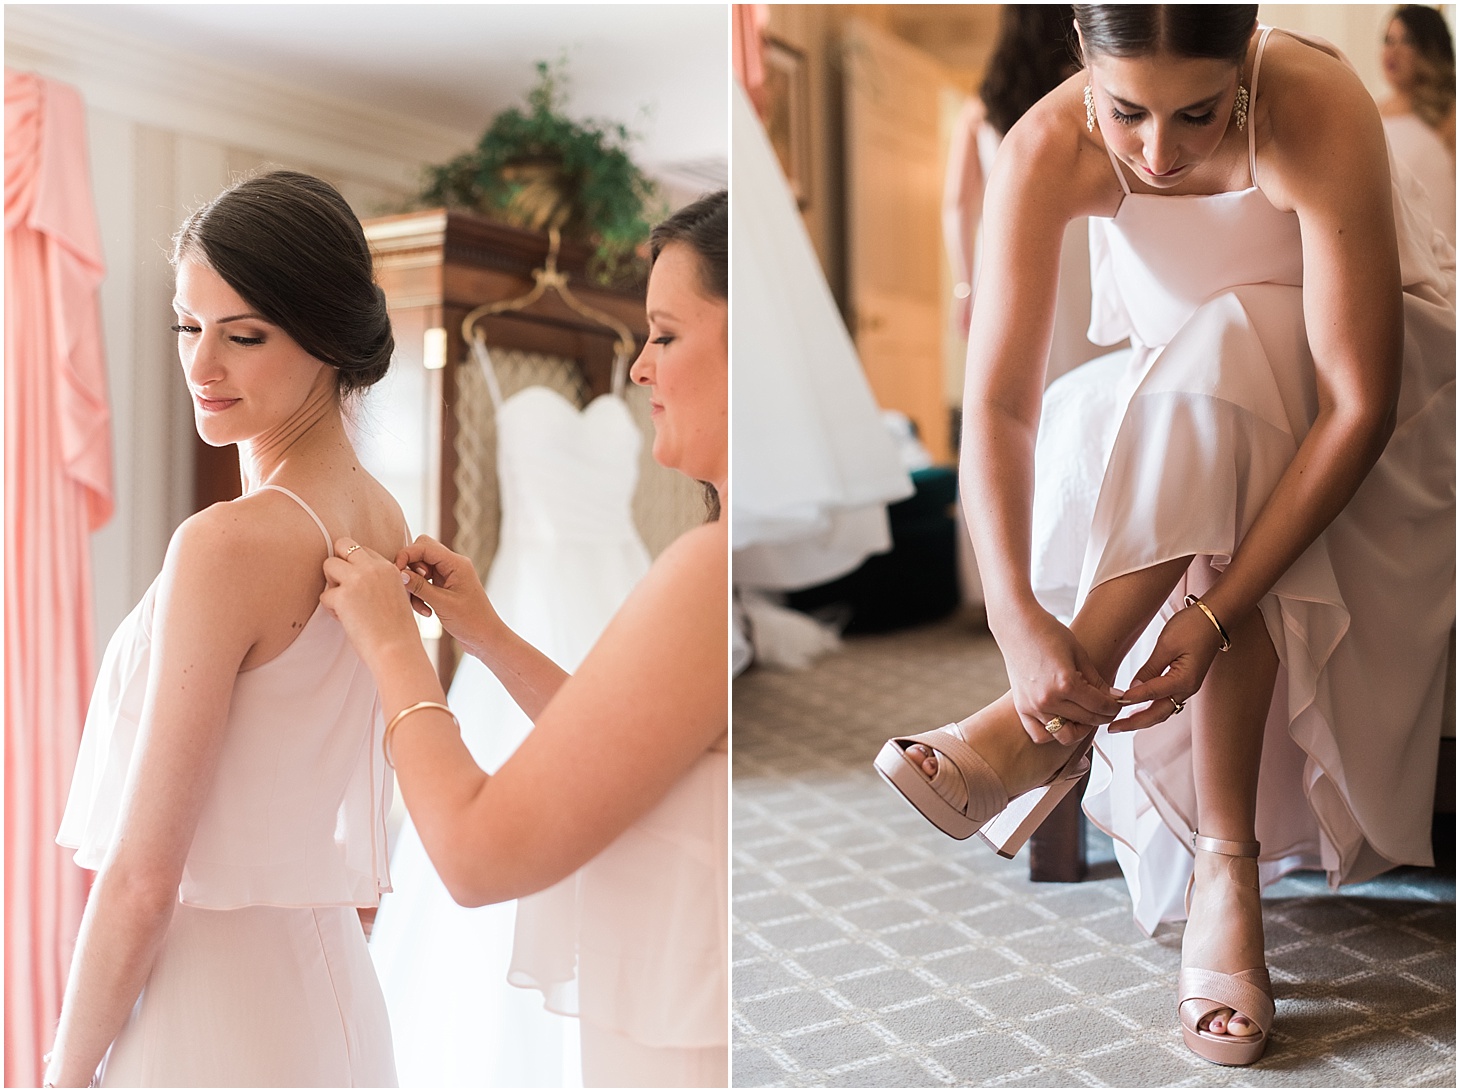 Bridesmaids Getting Ready in RK Bridal Dresses | Blush and Black Tie Wedding in Williamsburg, VA | Sarah Bradshaw Photography